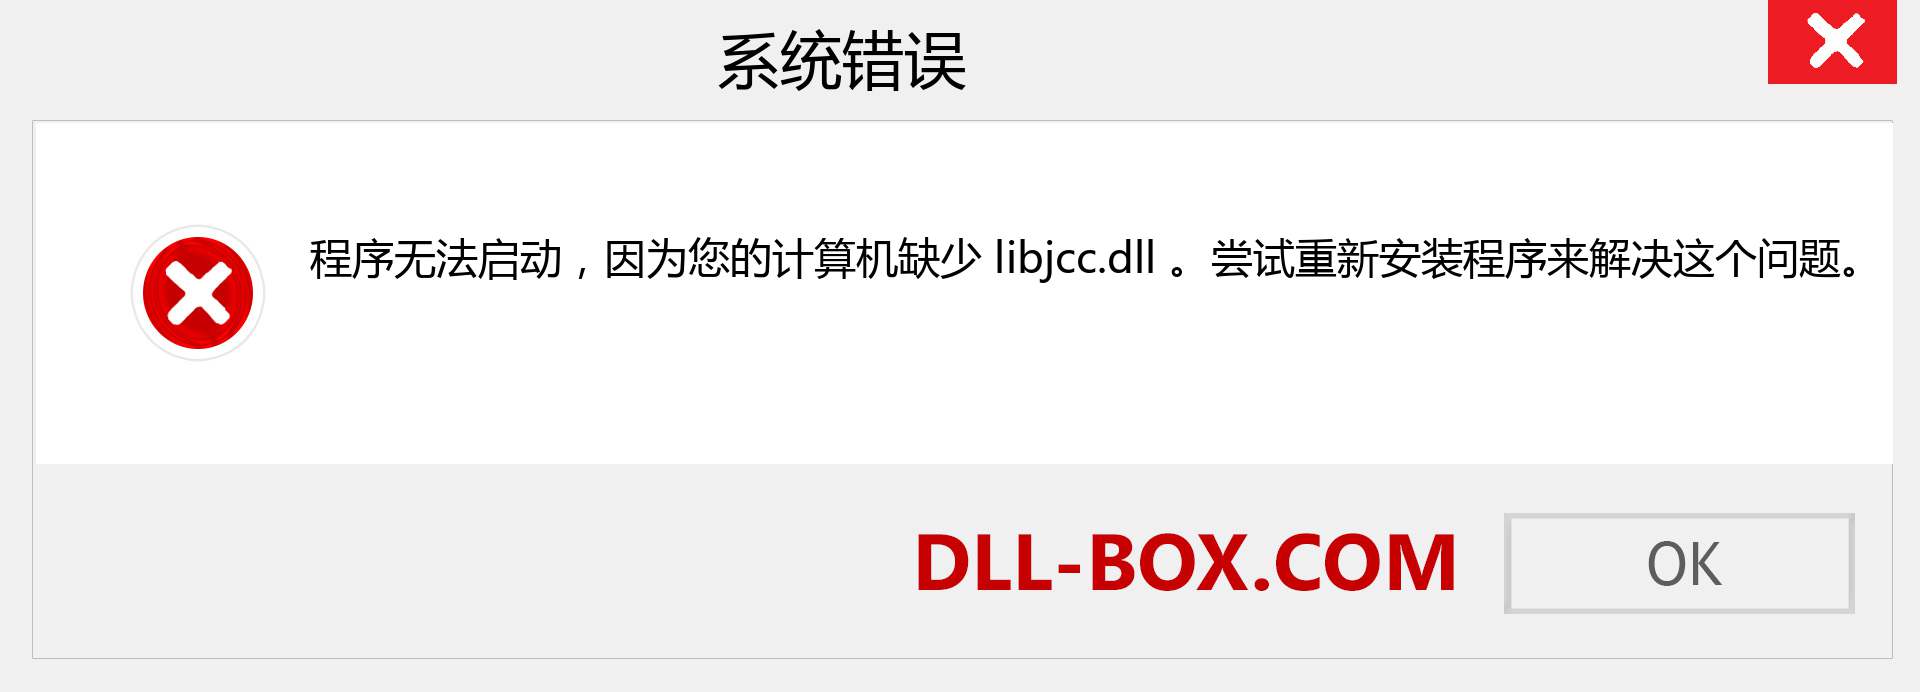 libjcc.dll 文件丢失？。 适用于 Windows 7、8、10 的下载 - 修复 Windows、照片、图像上的 libjcc dll 丢失错误